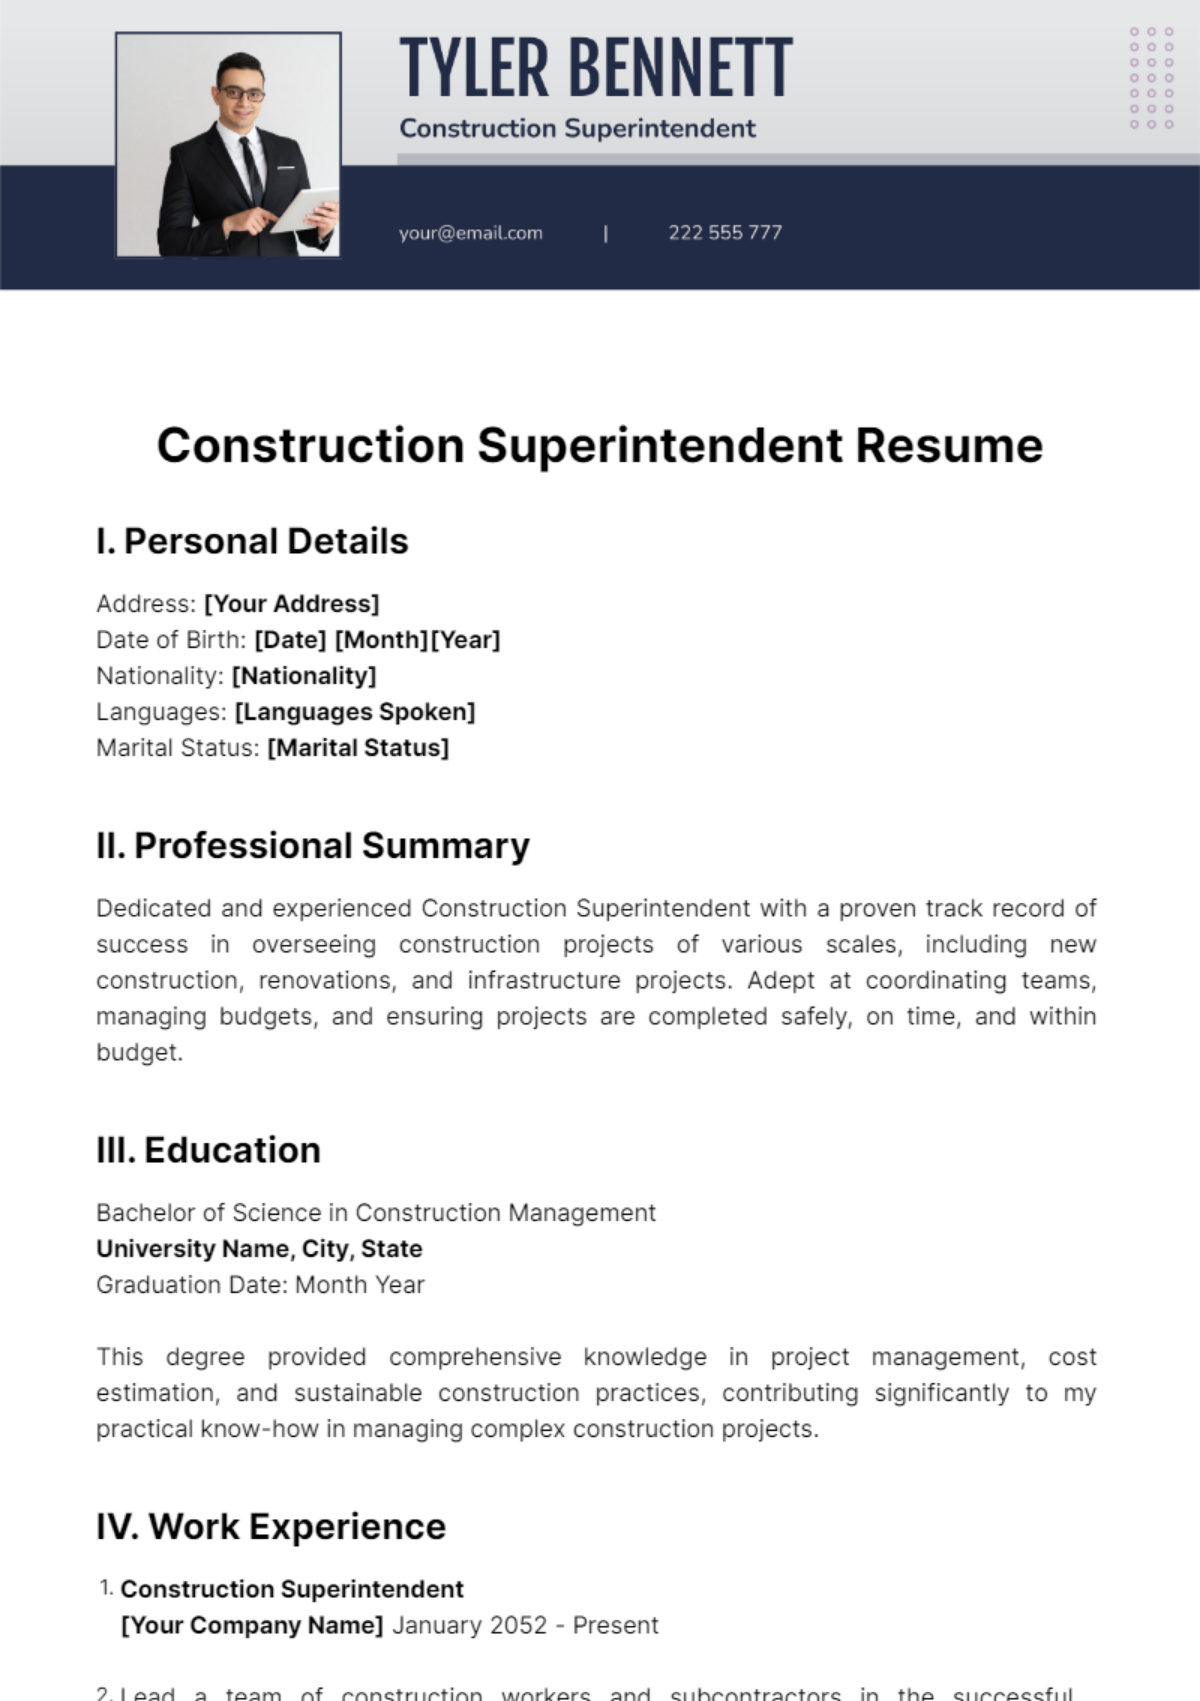 Construction Superintendent Resume Template